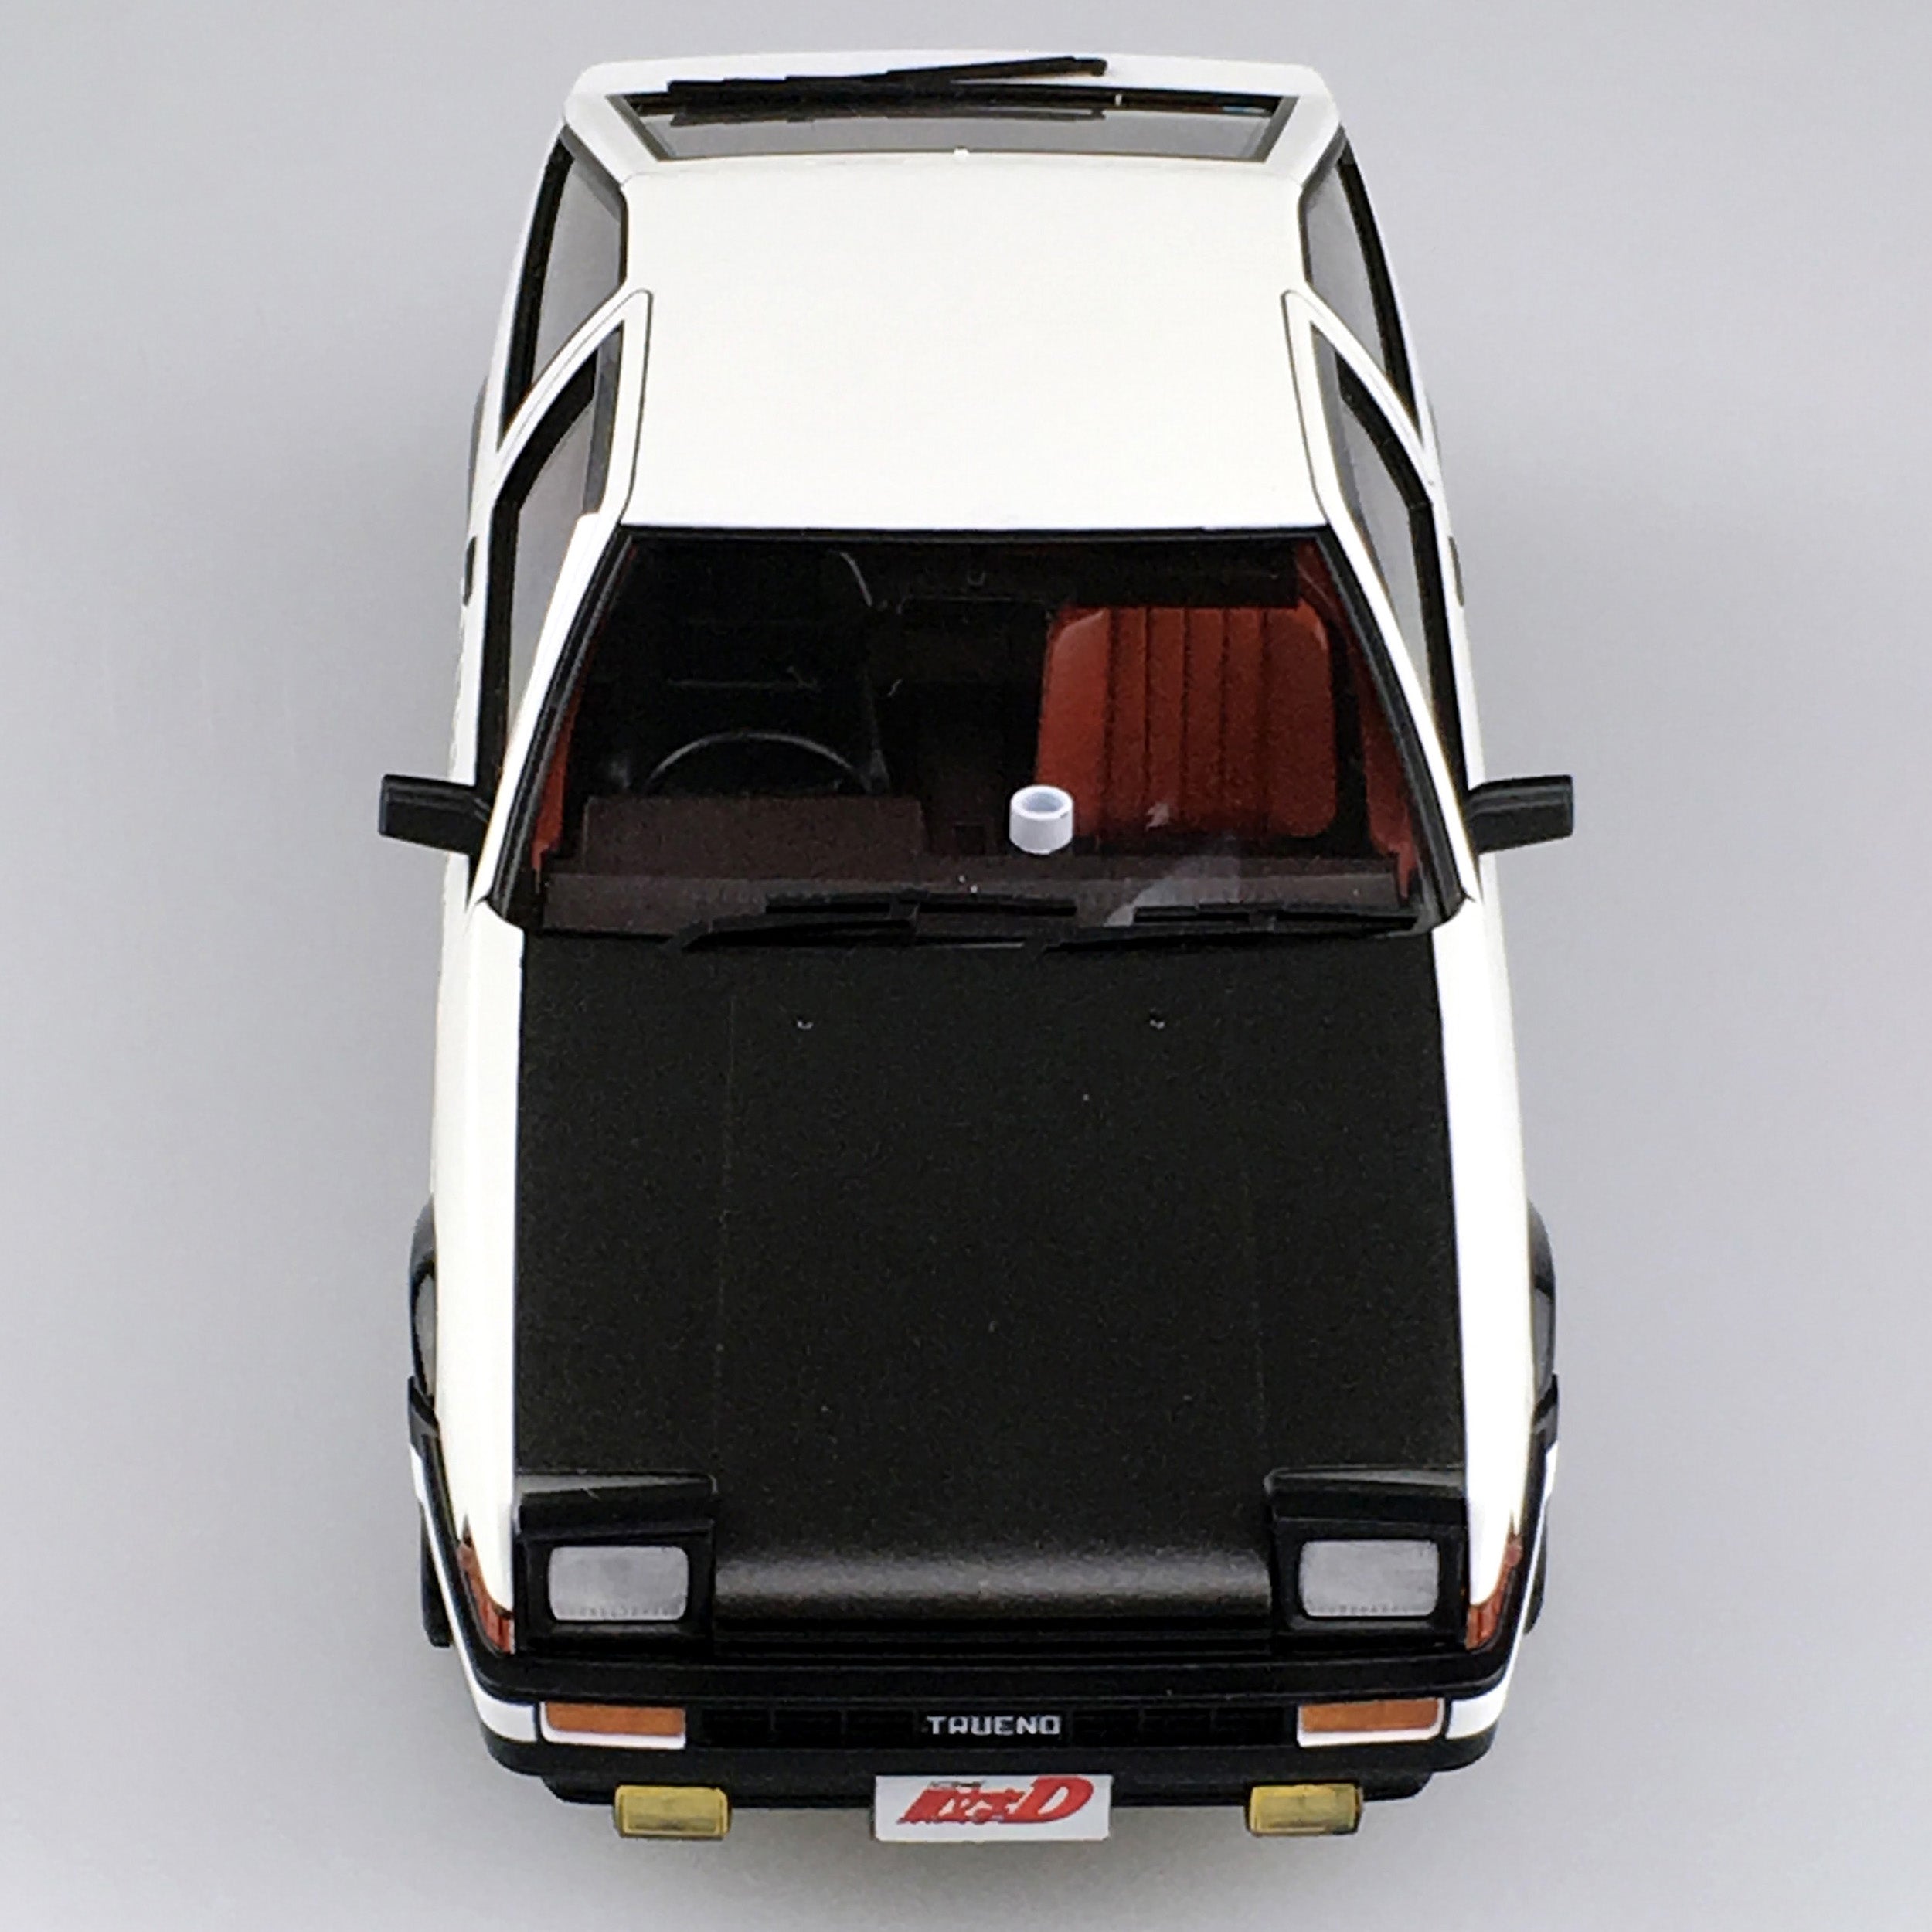 Aoshima - Initial D - No. 1 - Takumi Fujiwara AE86 Trueno Project D Model Model Kit (1/24 Scale) - Marvelous Toys